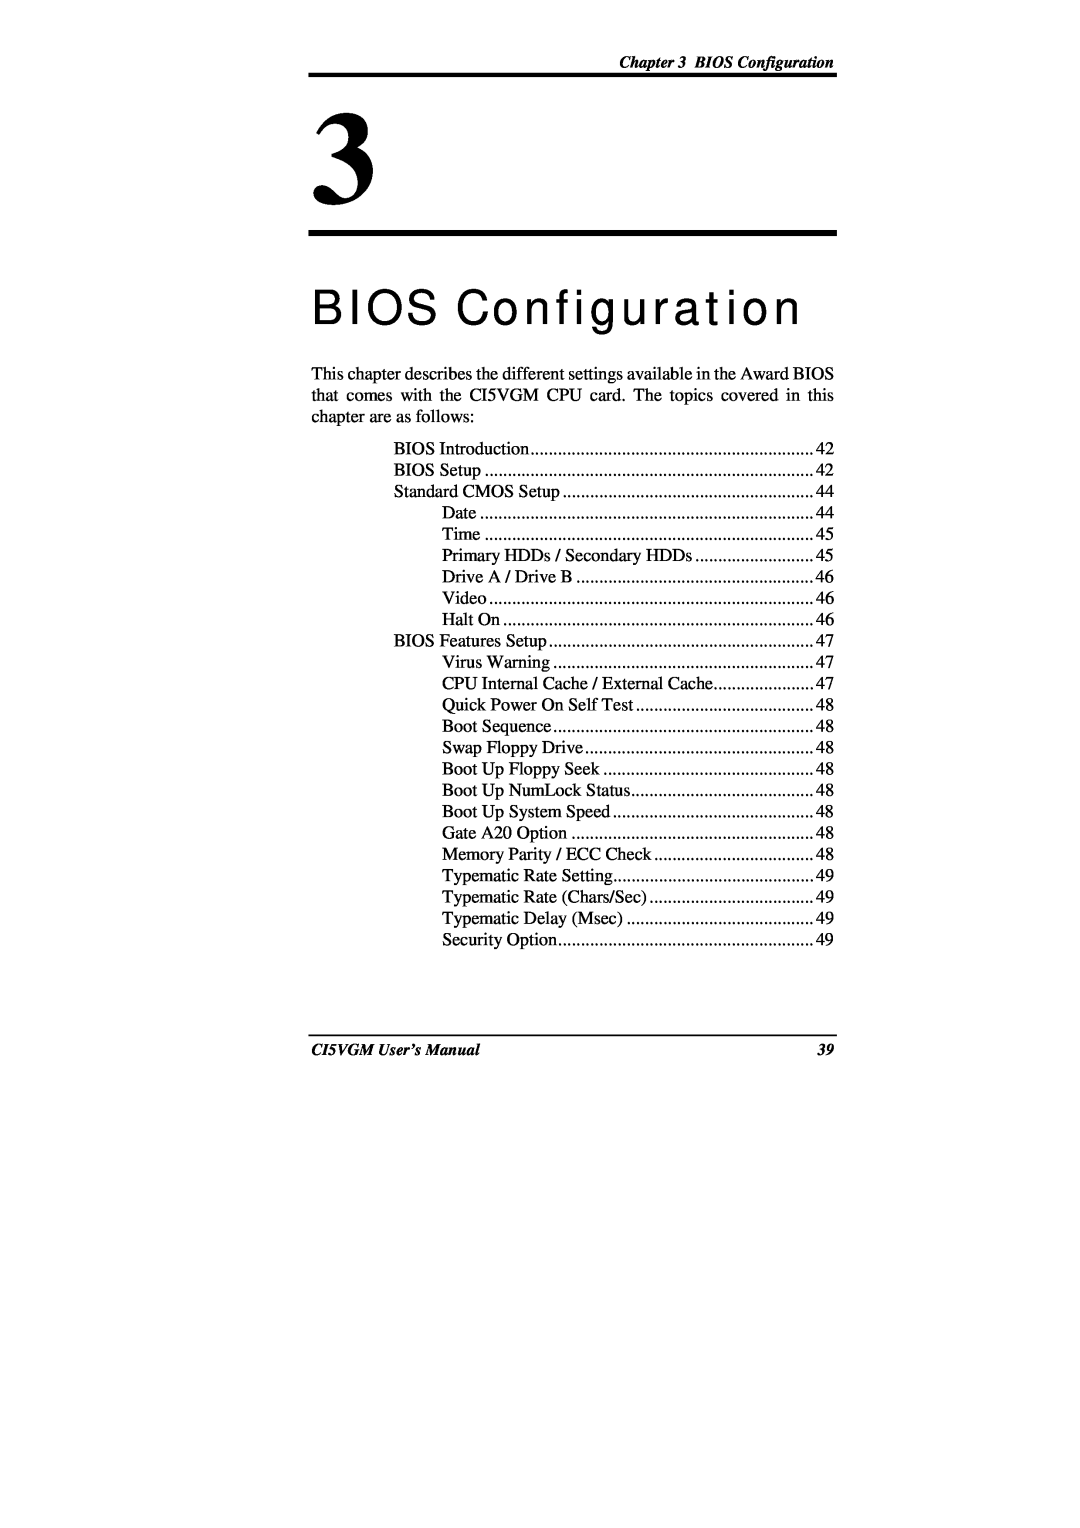 IBM CI5VGM Series user manual BIOS Configuration 